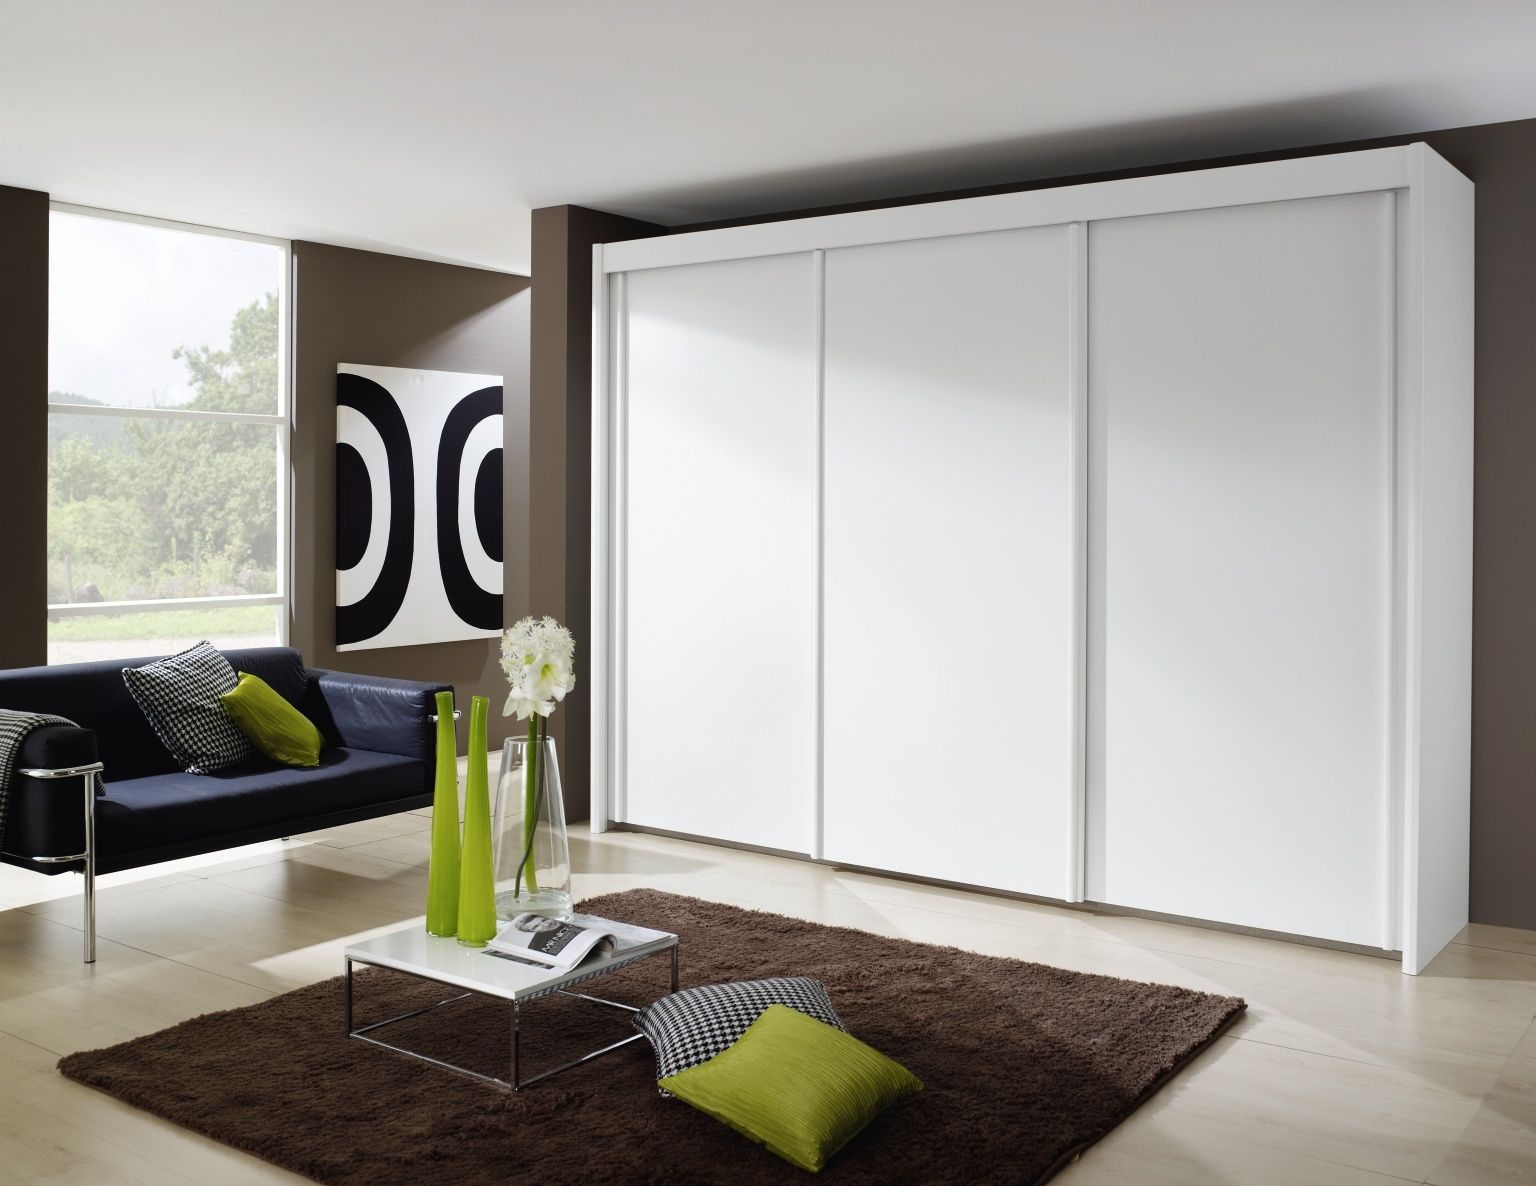 Rauch Imperial 3 Door Sliding Wardrobe In White – W 280cm – Cfs Furniture Uk Inside Rauch Imperial Wardrobes (Photo 9 of 15)